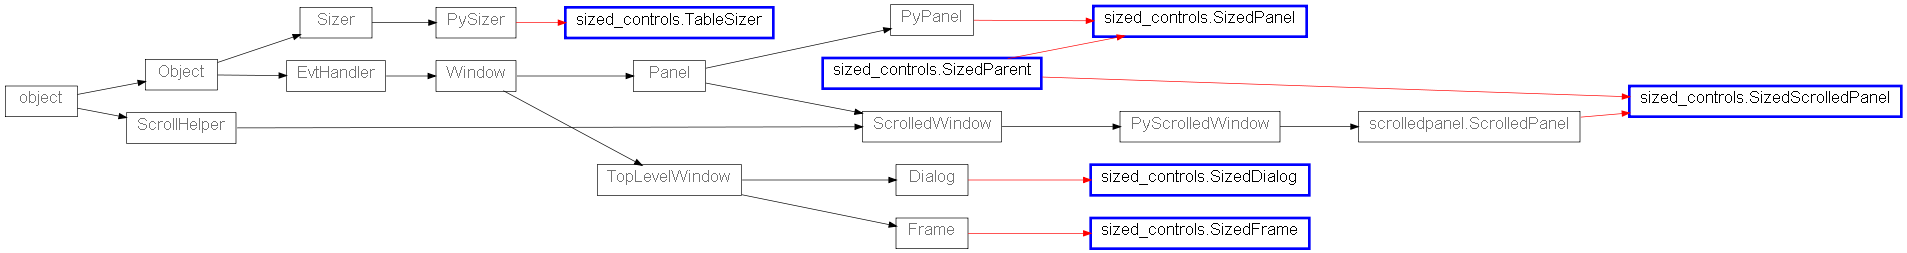 Inheritance diagram of sized_controls